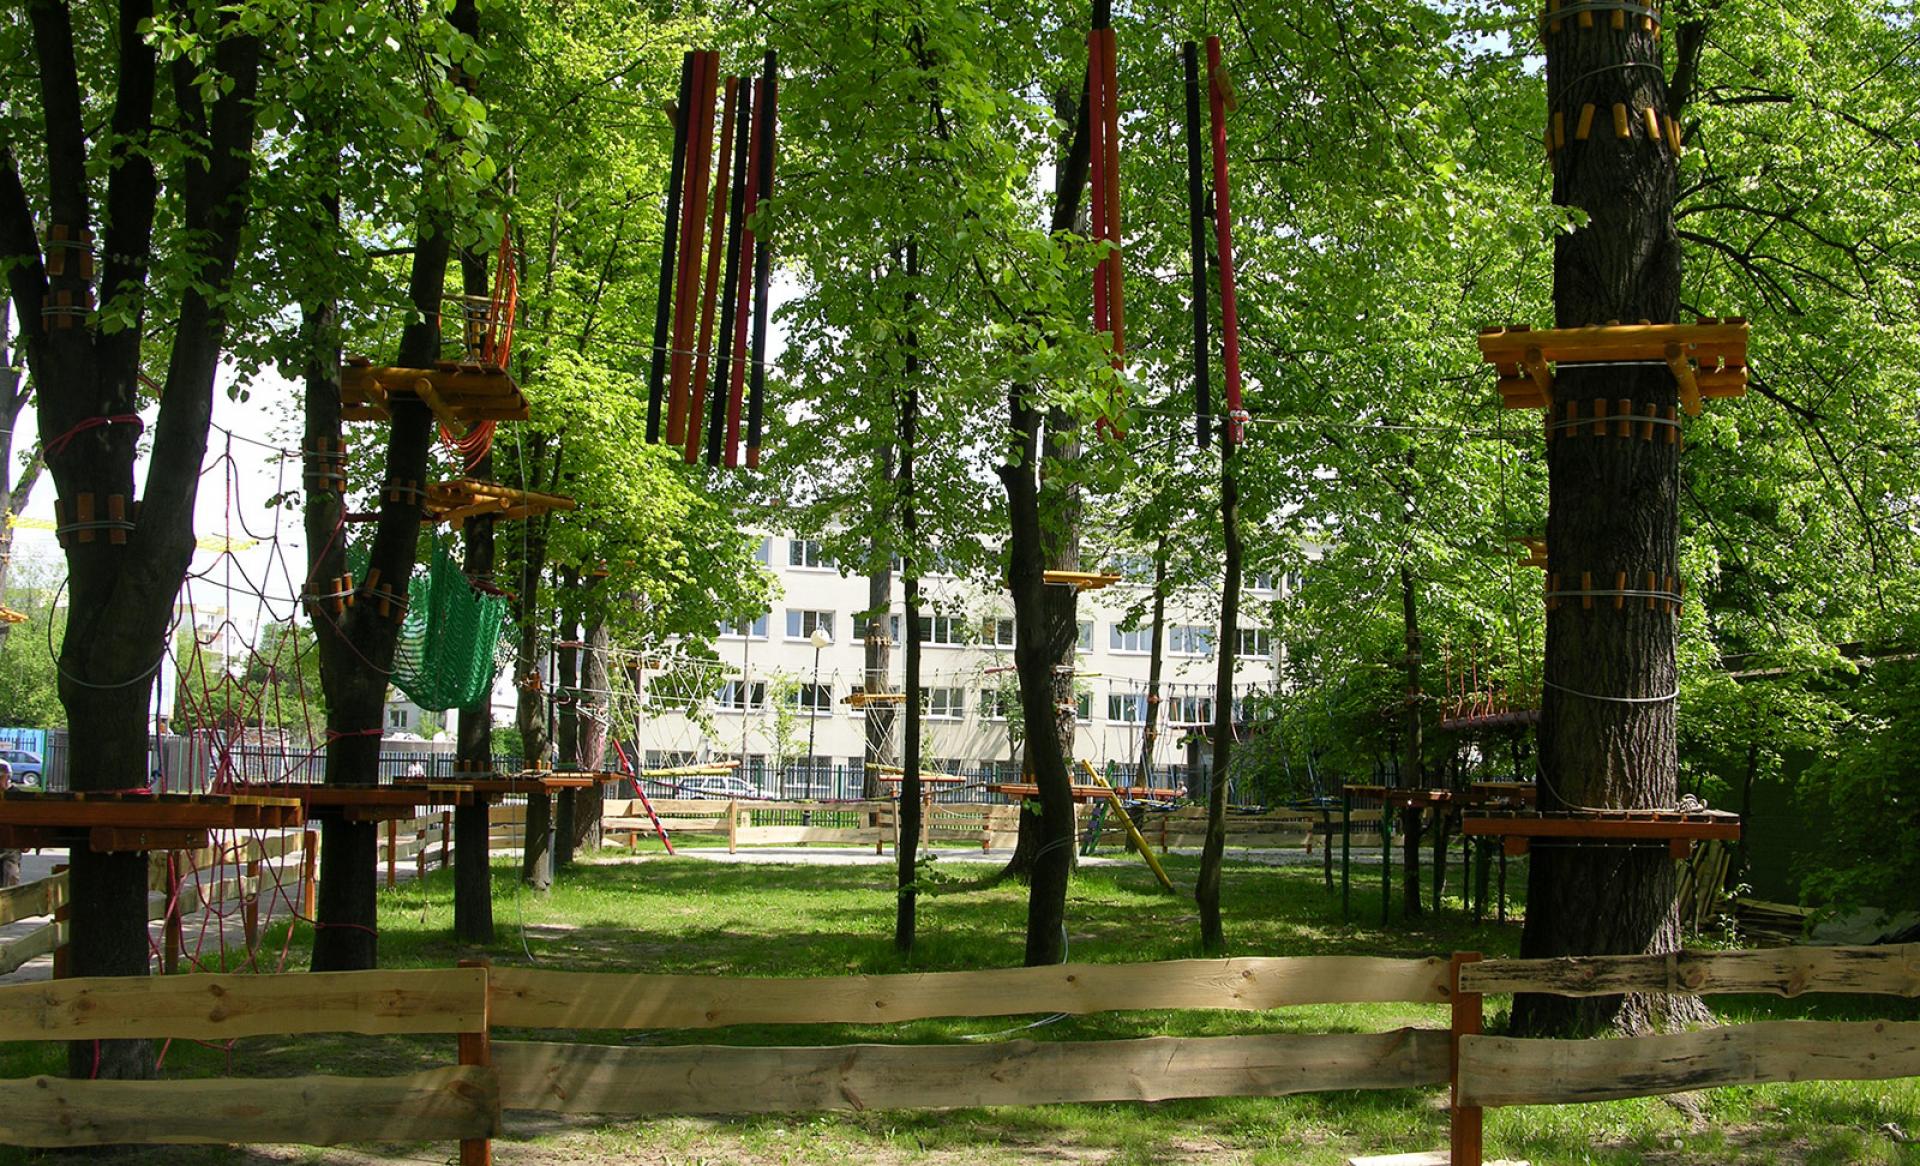 Park linowy